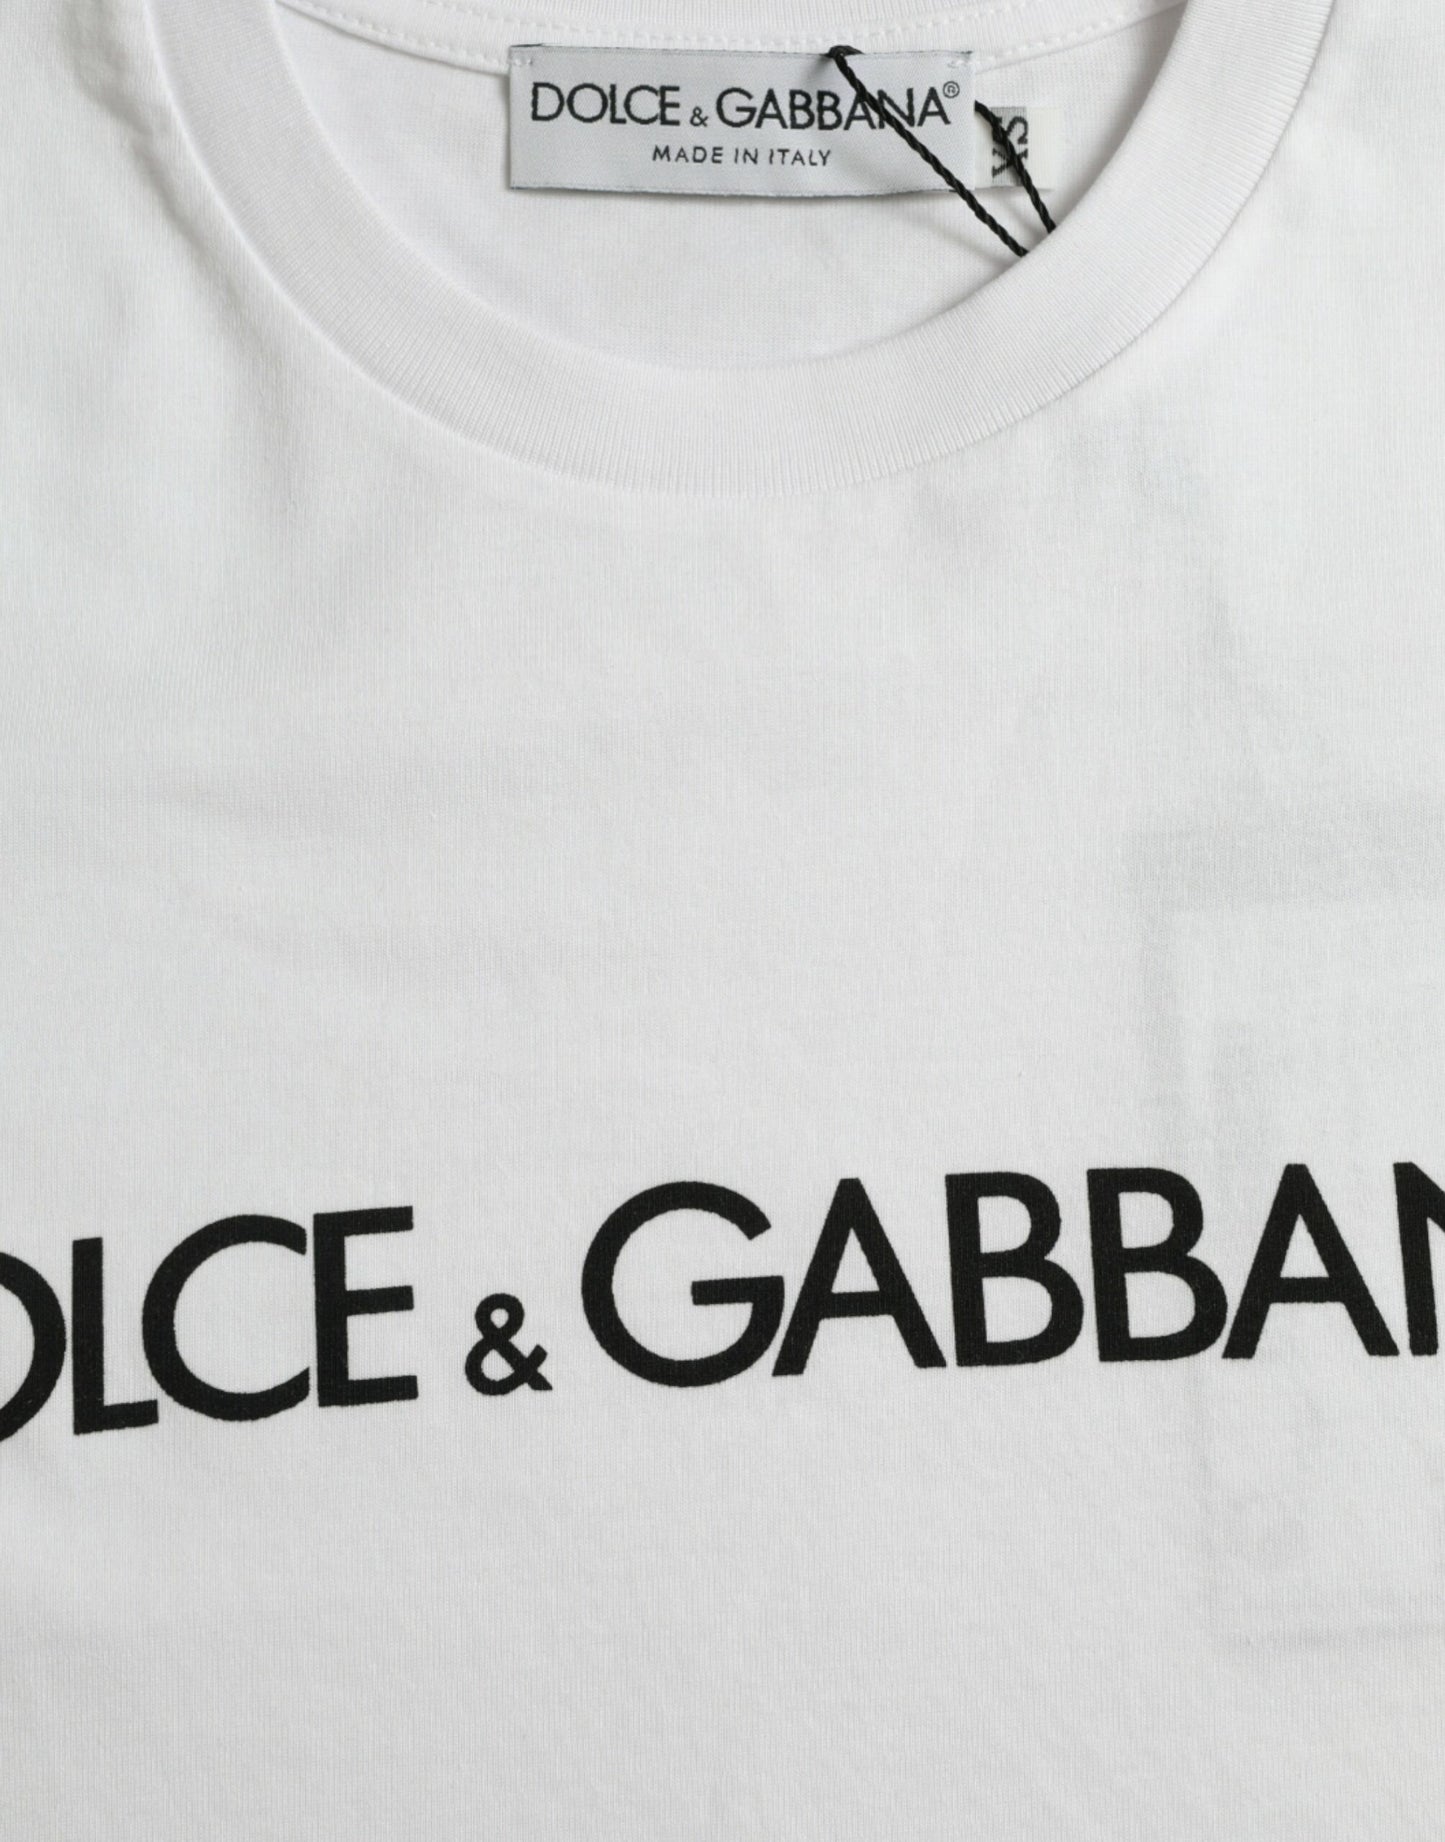 Dolce & Gabbana Elegant White Logo Crewneck Tee